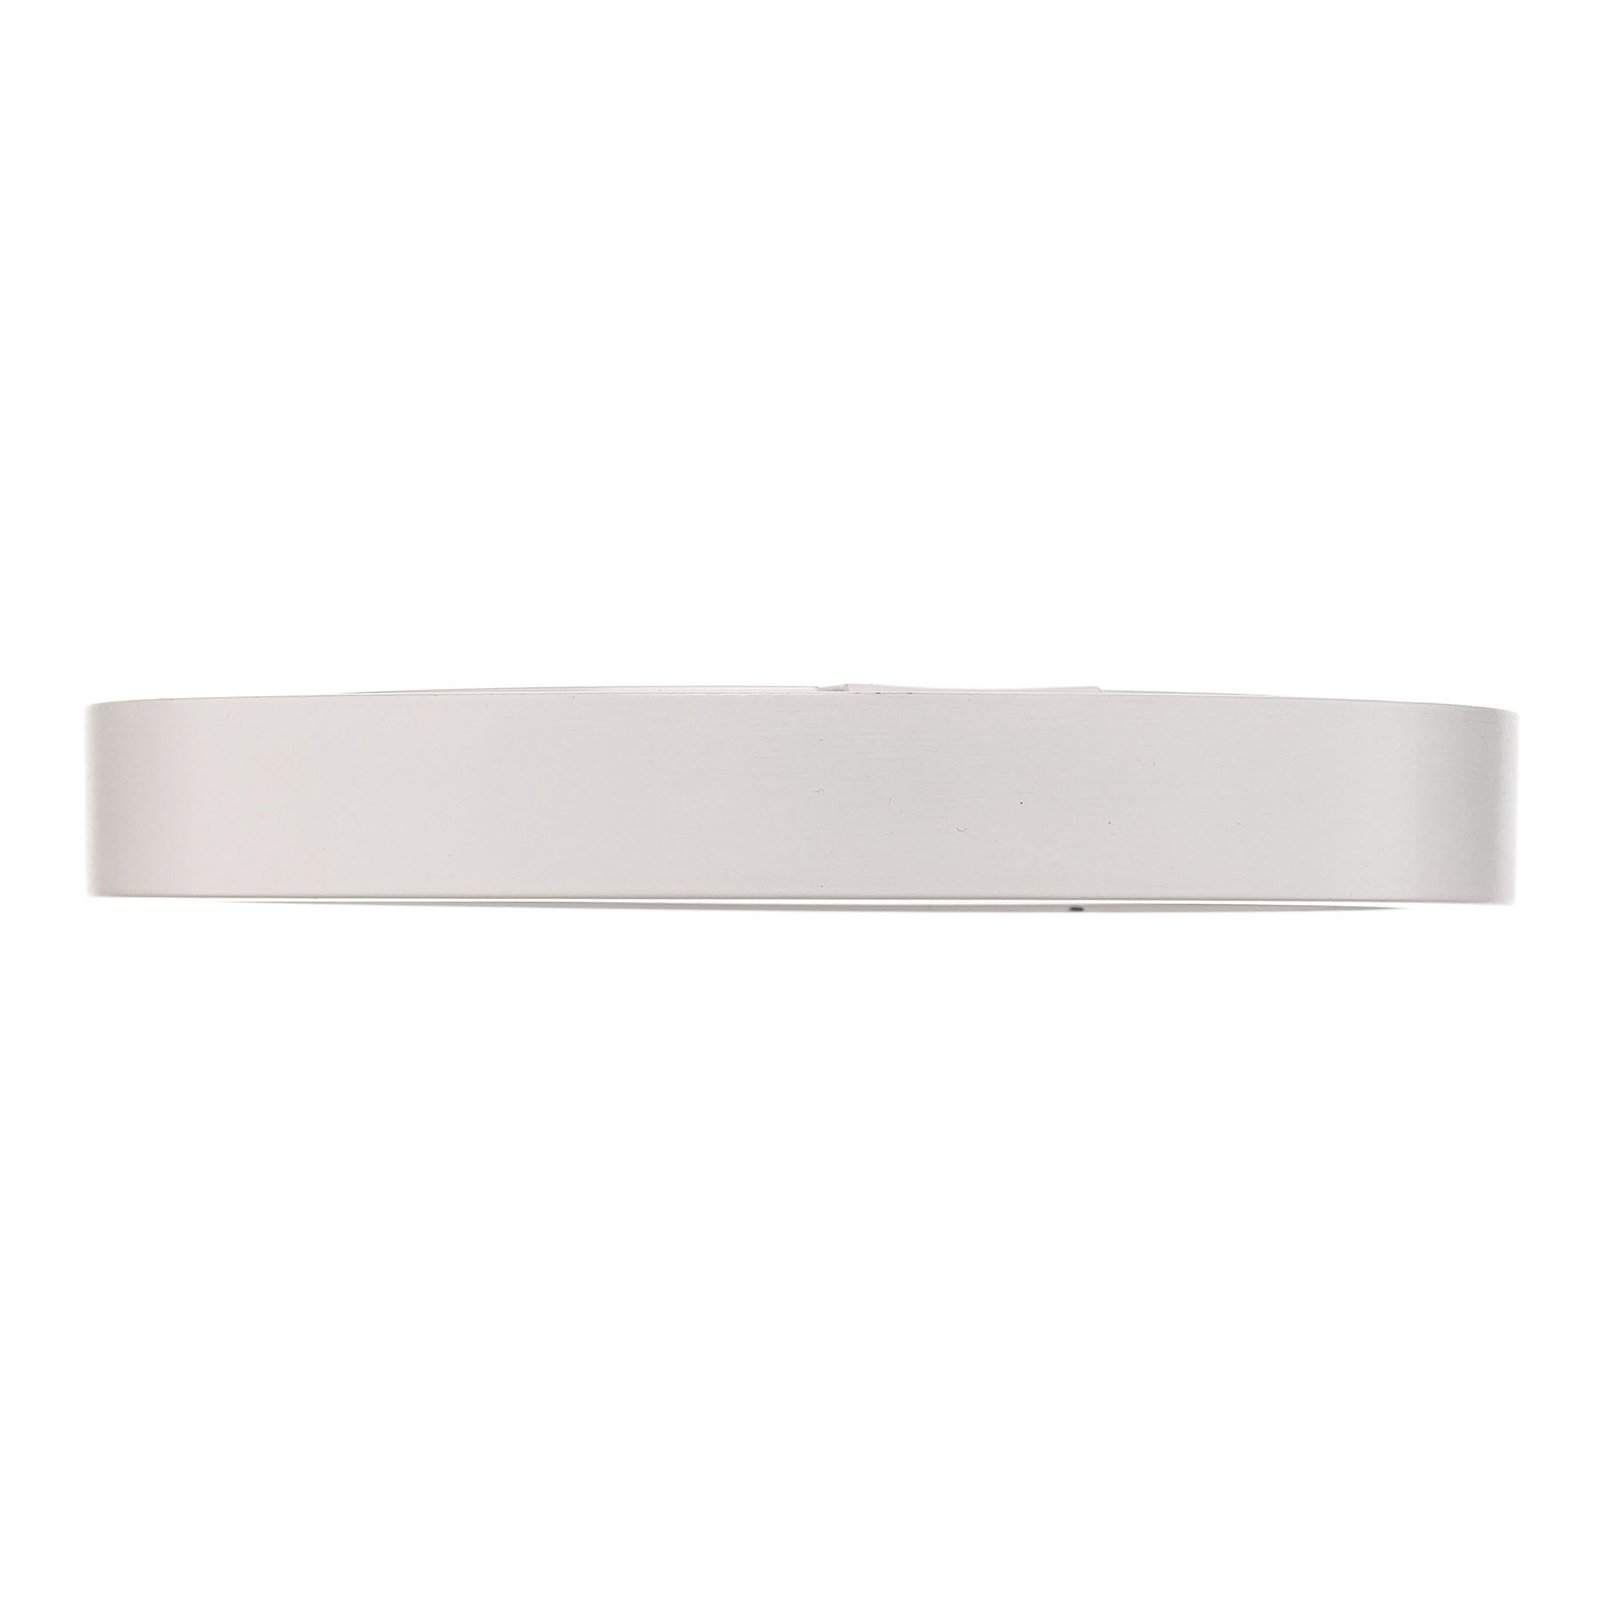 Plafonnier LED Vika, rond, blanc, Ø 18 cm